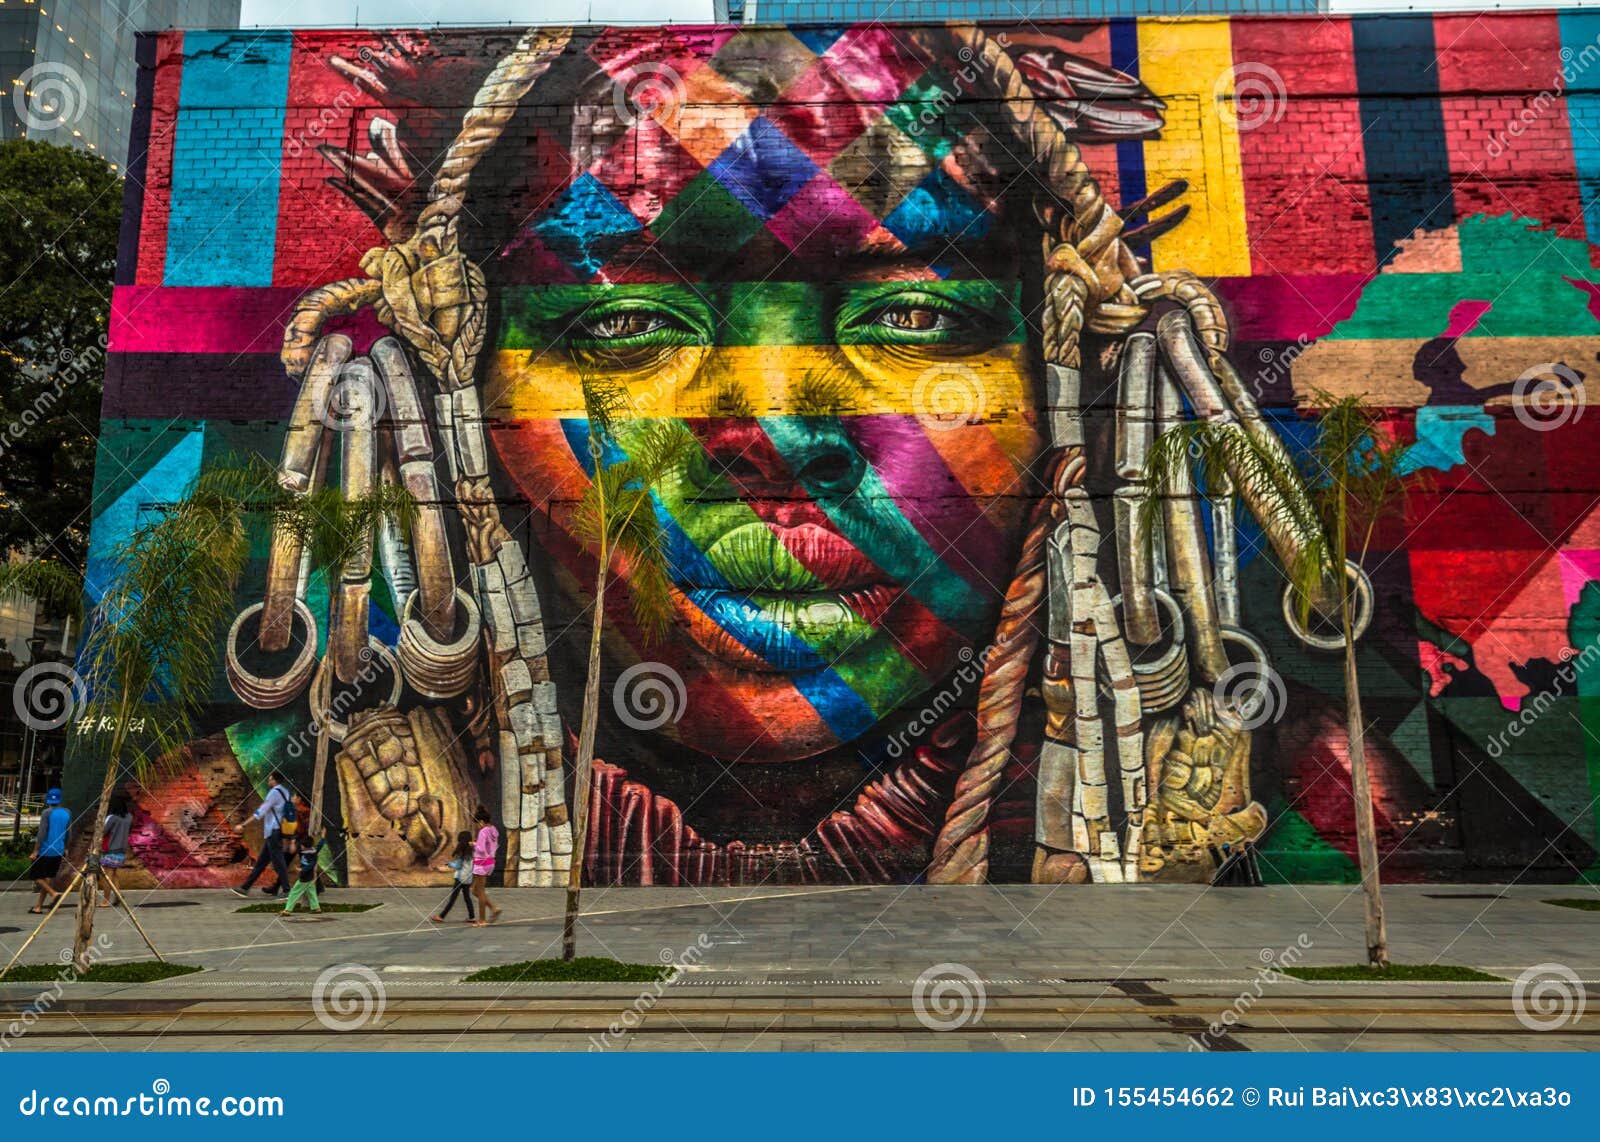 Rio De Janeiro June 21 2017 Street Art In The Favela Of Santa Marta